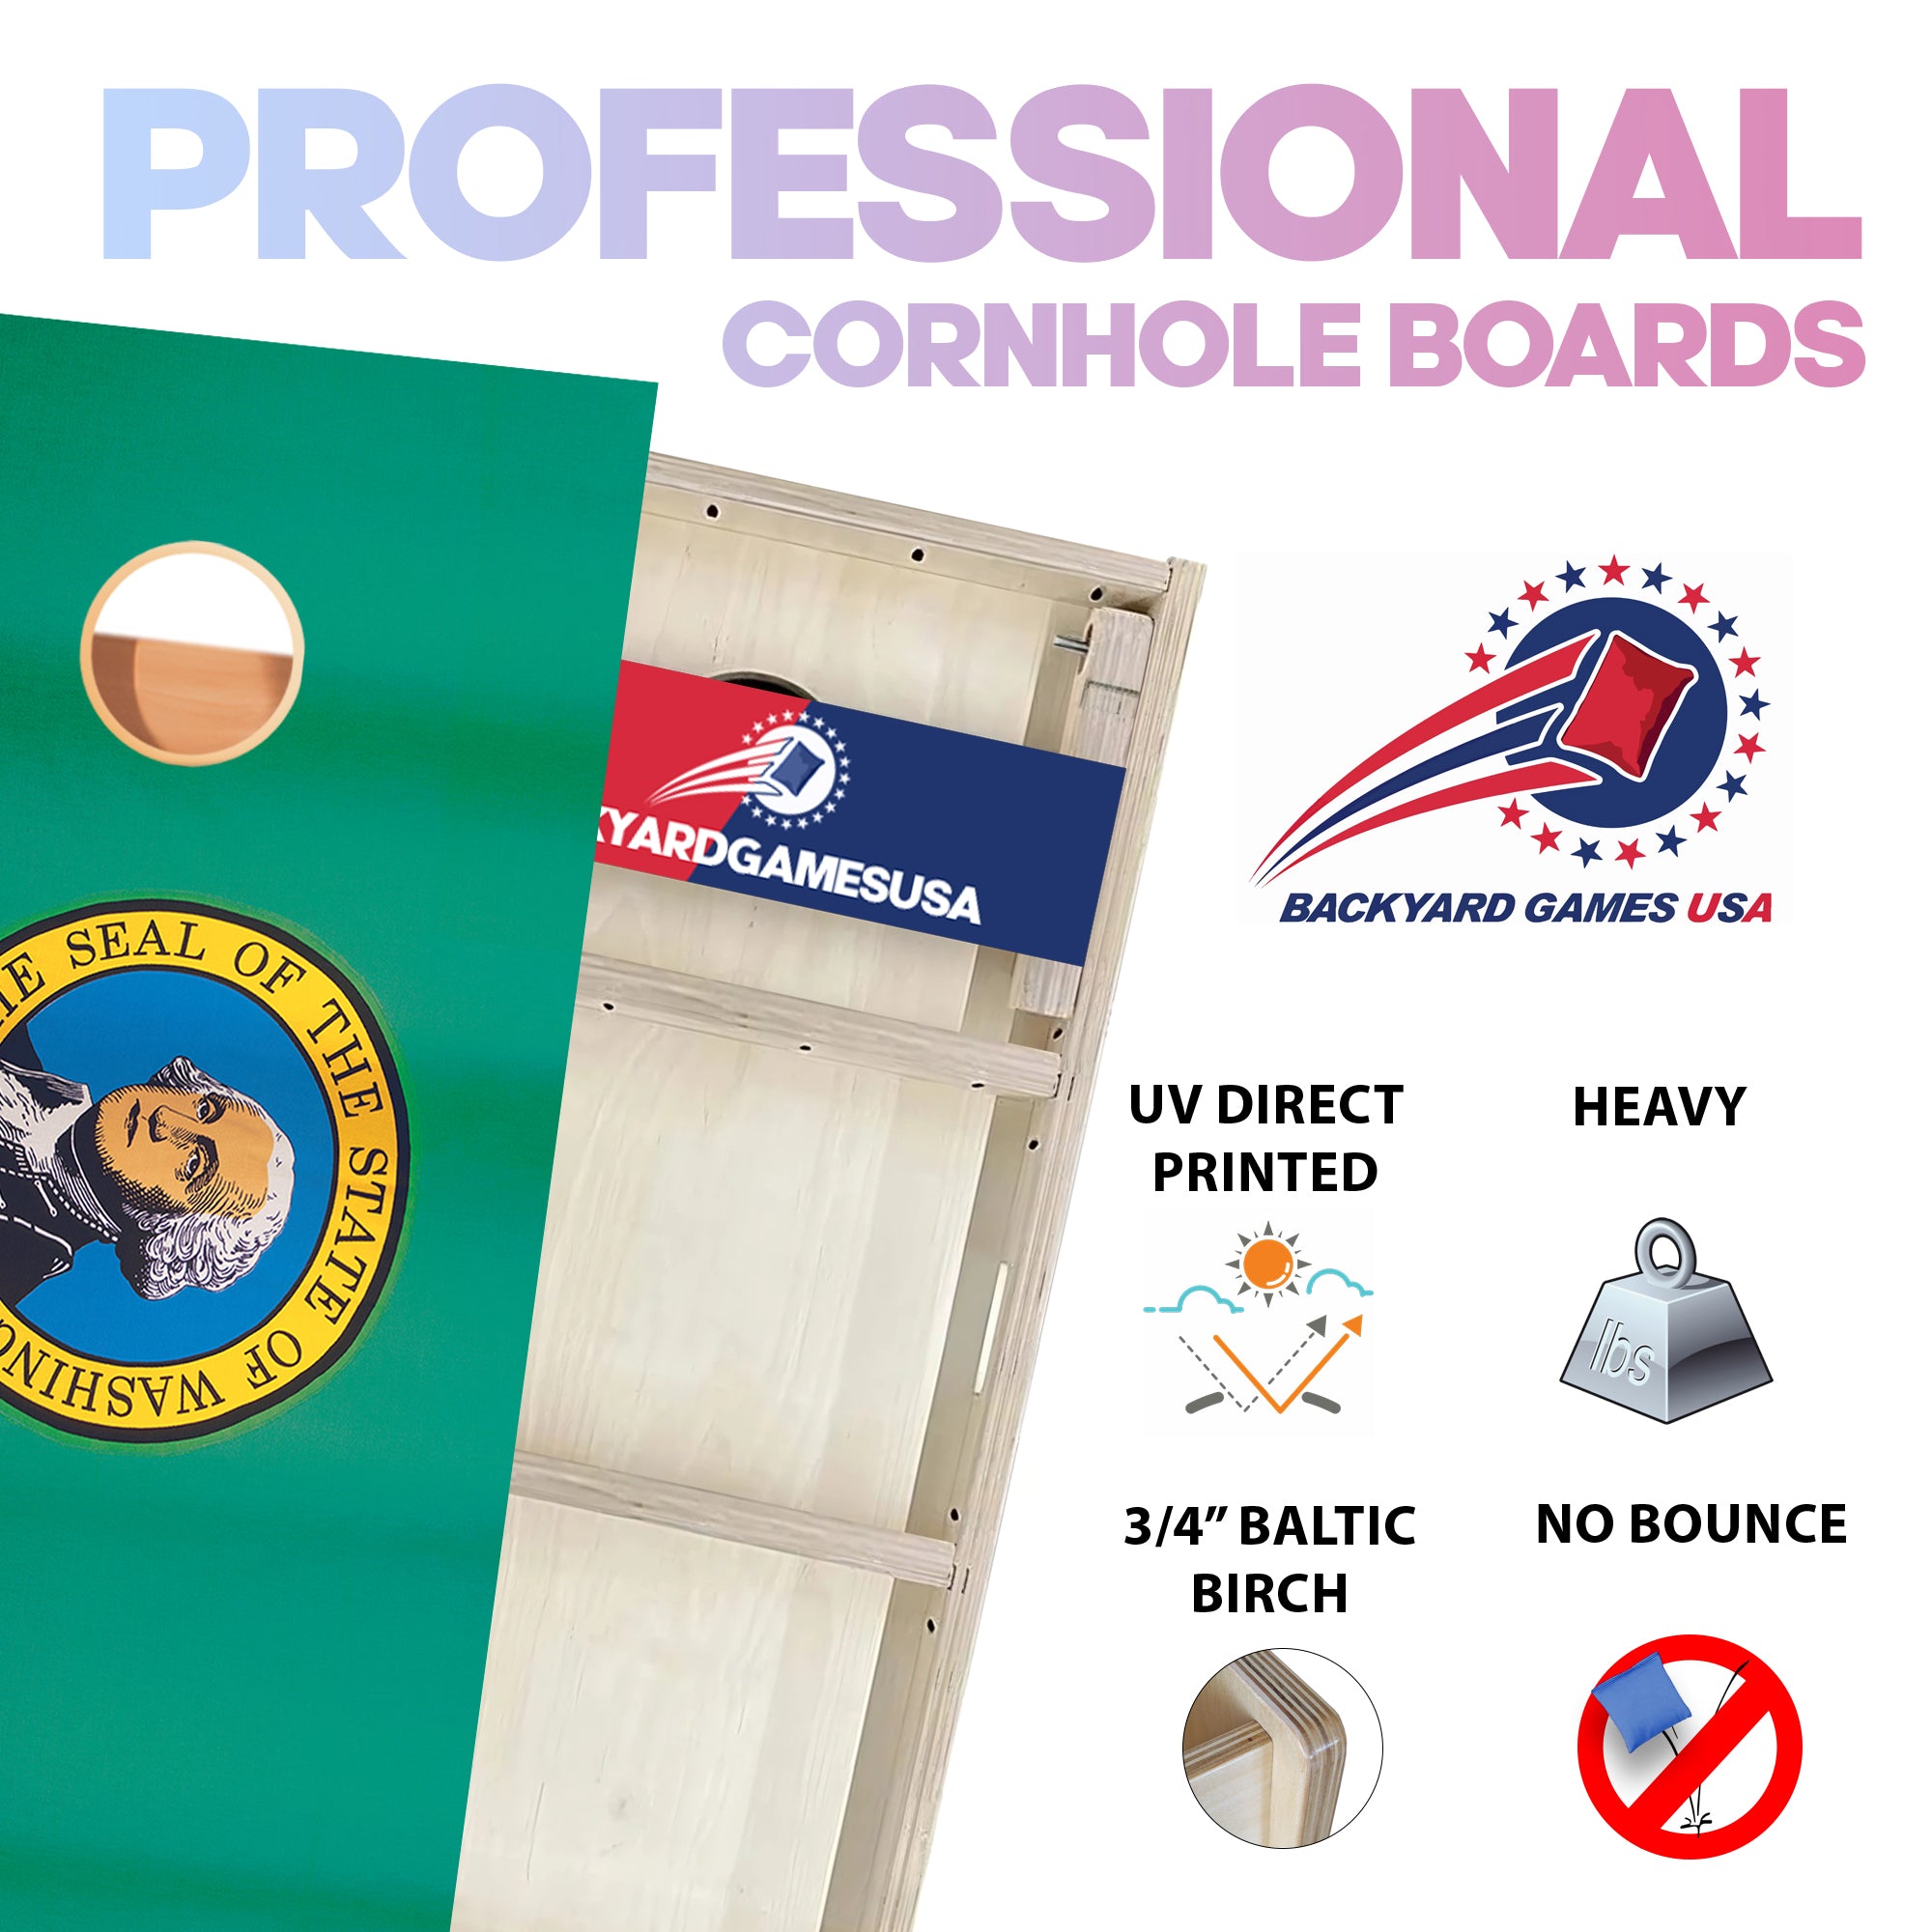 Washington Professional Cornhole Boards